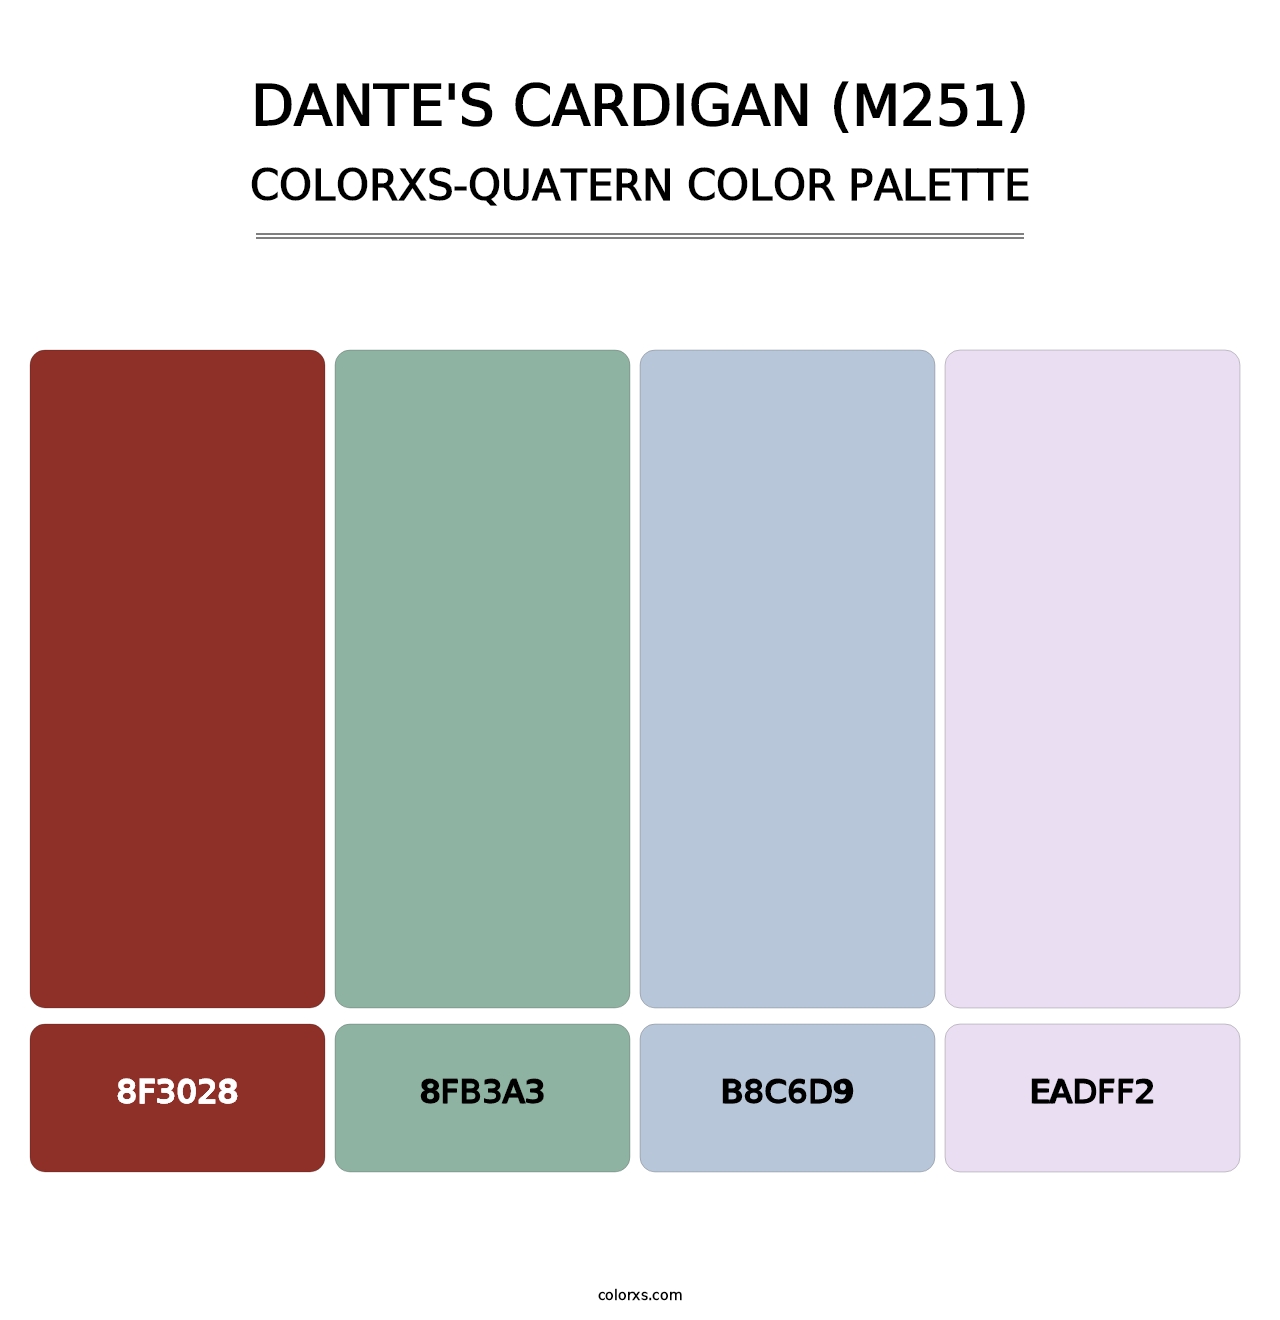 Dante's Cardigan (M251) - Colorxs Quatern Palette